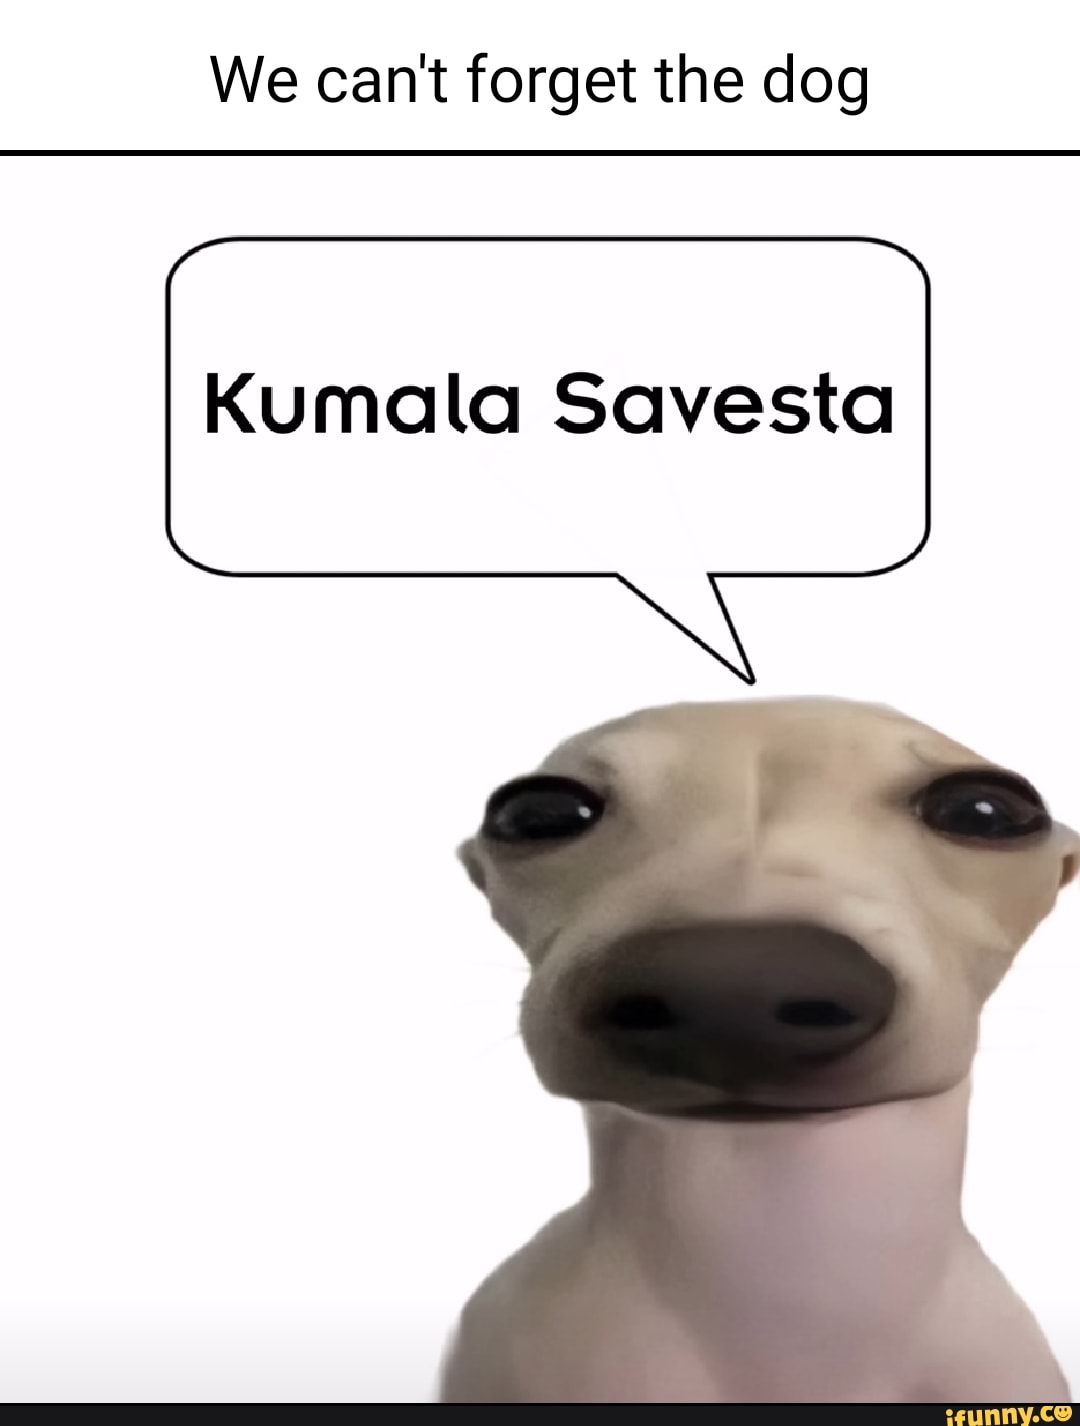 fyp #kumalalasavesta kumala and savesta's grandfather